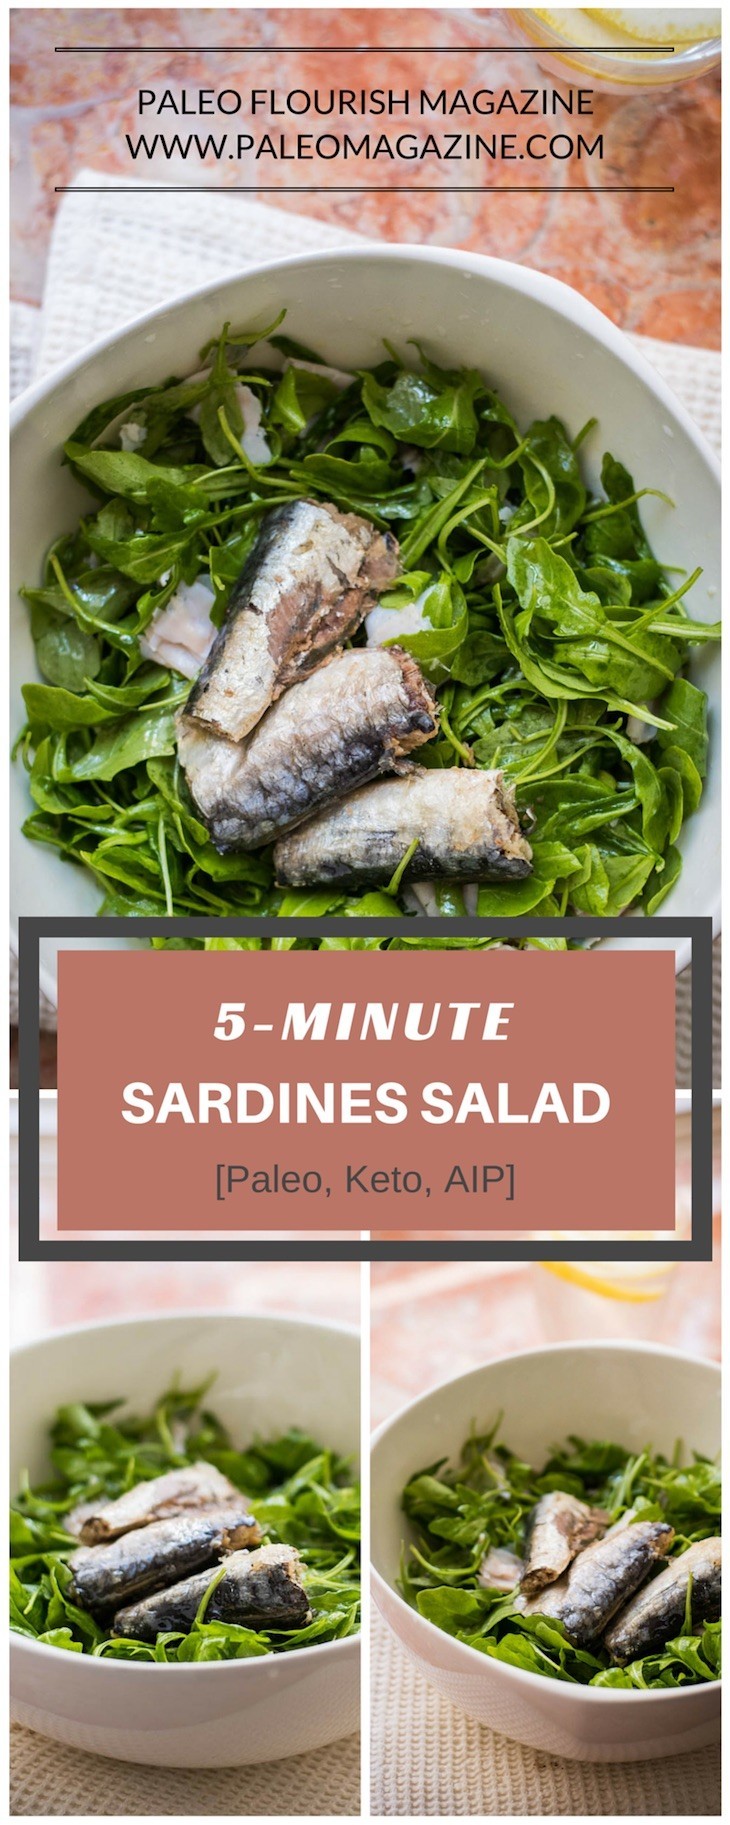 5-minute paleo sardines salad recipe #paleo #keto #lowcarb #aip https://ketosummit.com/5-minute-sardines-salad-recipe-paleo-keto-aip